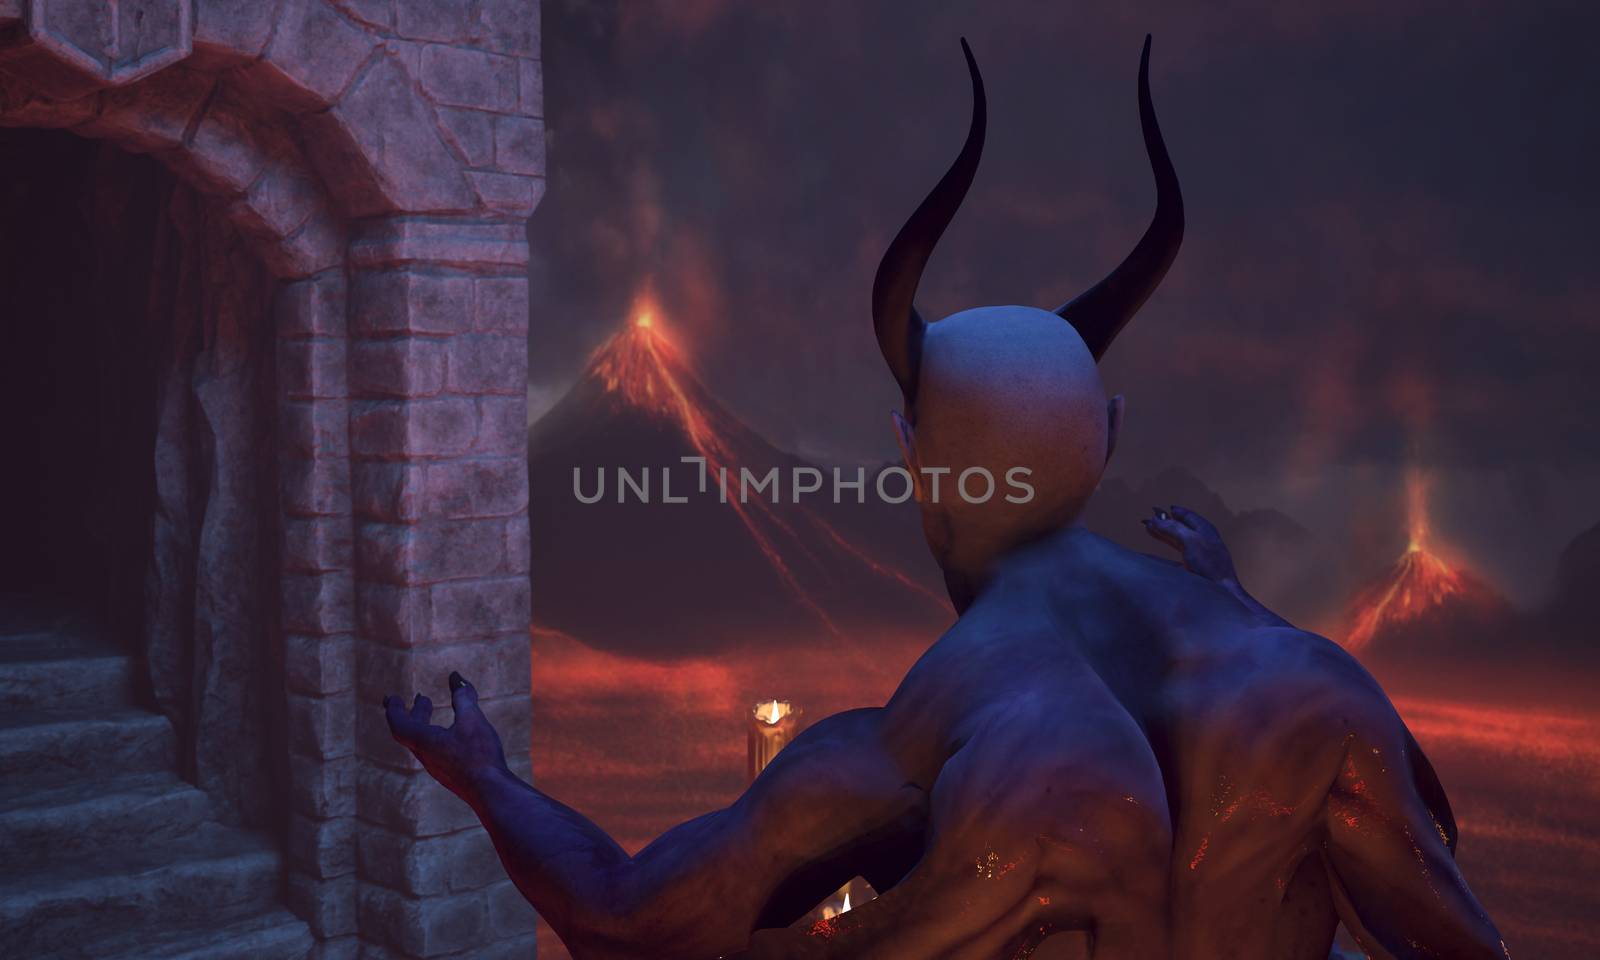 Fallen angel satan in hell - 3d rendering